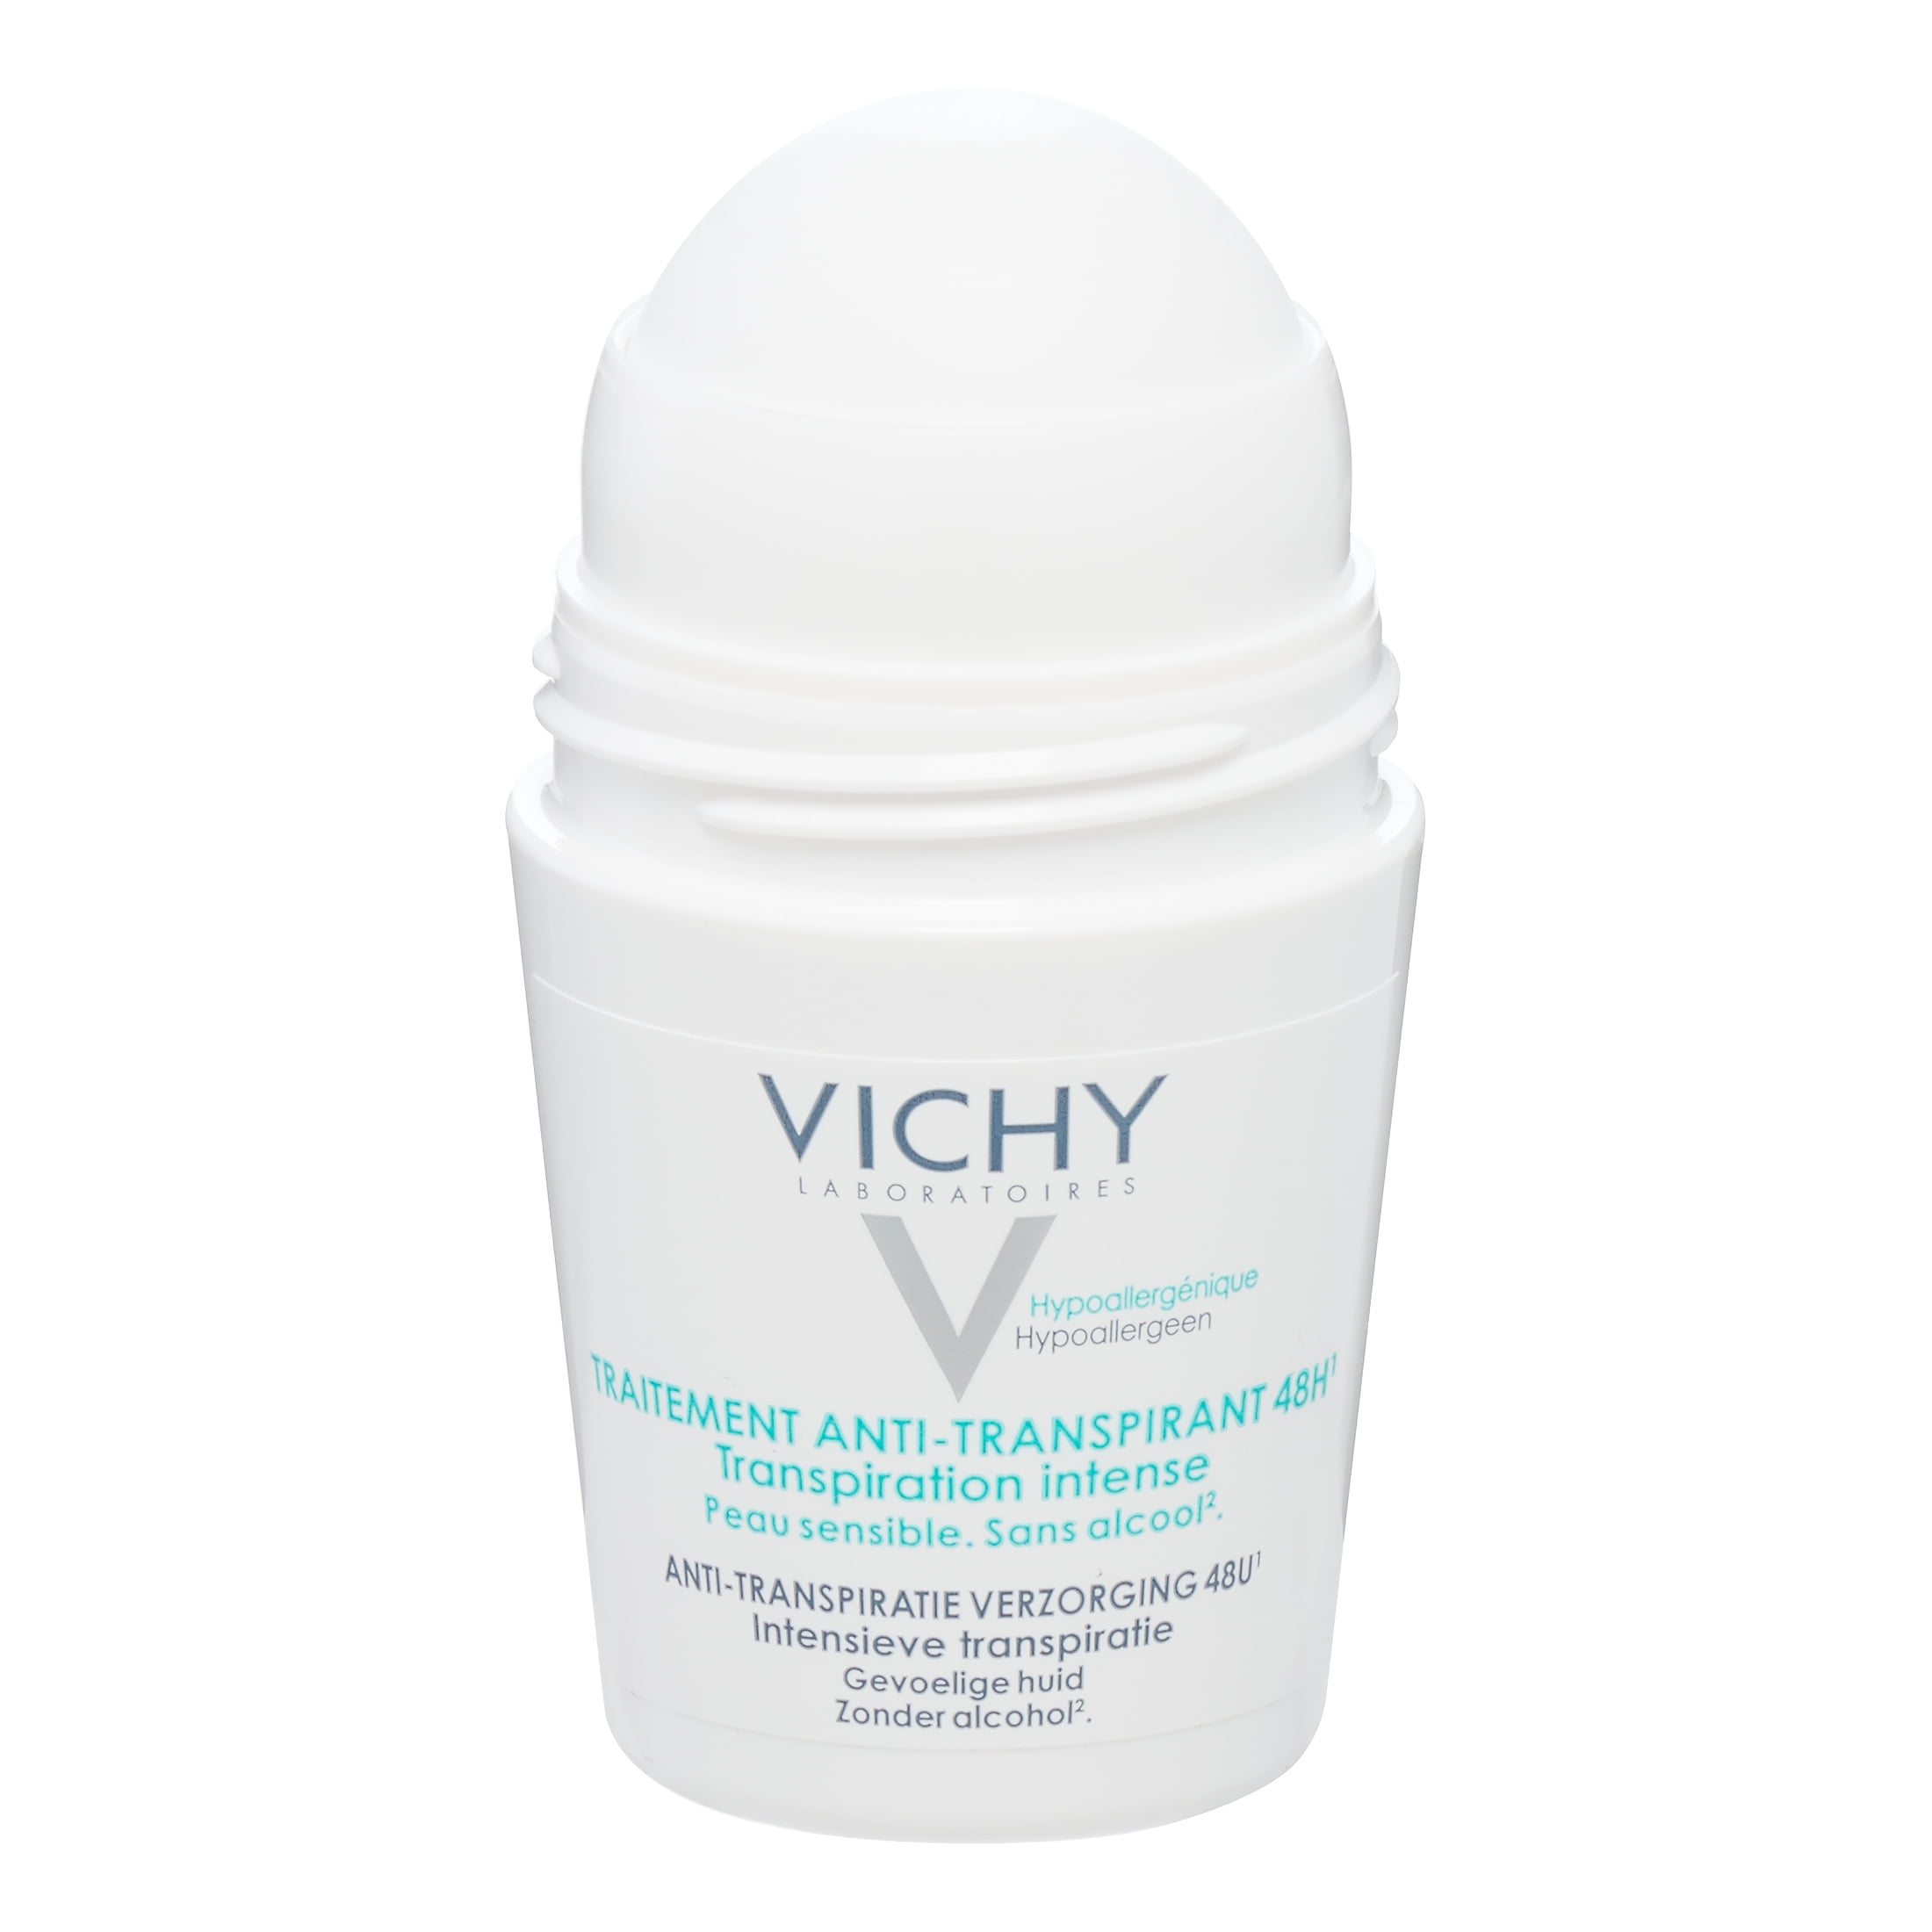 Vichy 48H Intensive Anti-perspirant Deodorant Roll-on for Women, Oz Walmart.com